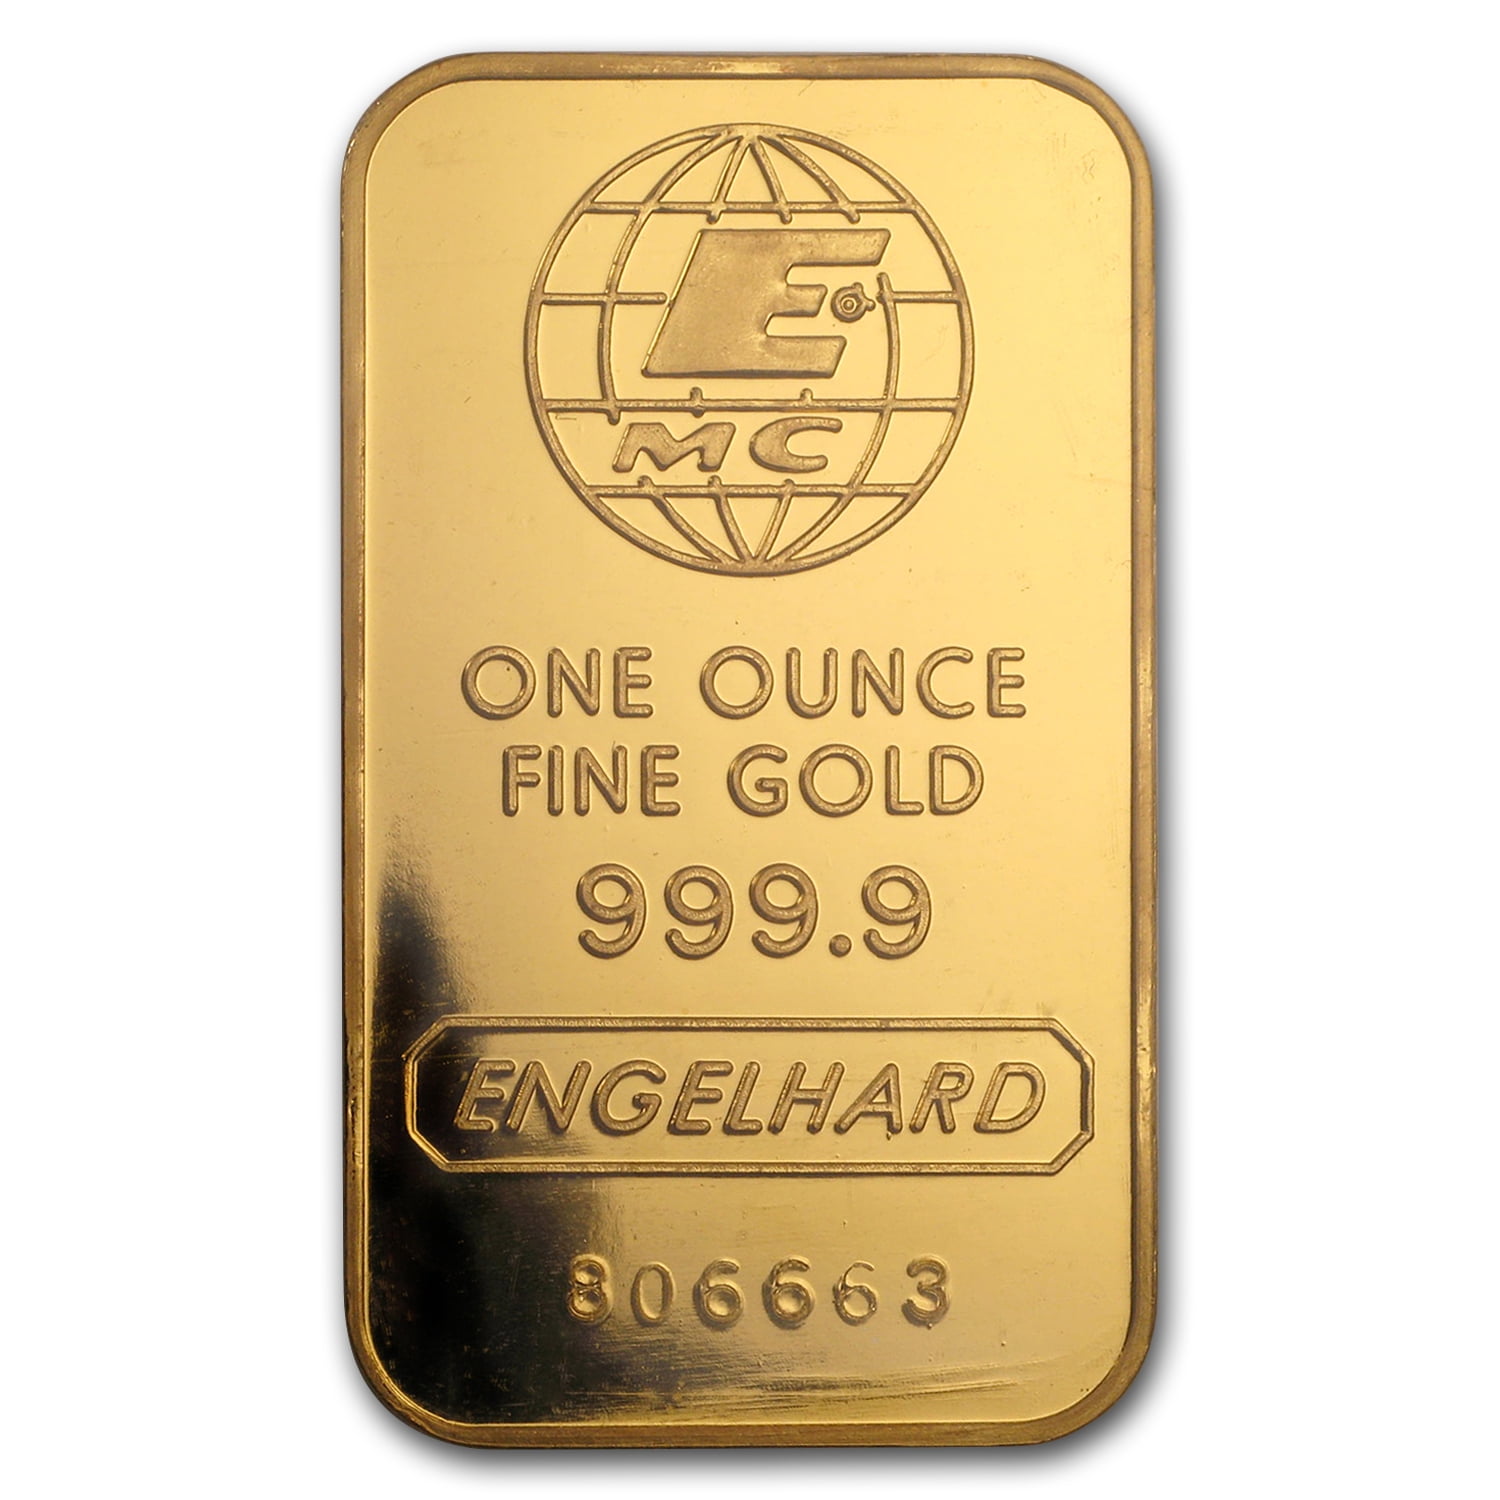 One Ounce Fine Gold. Лондон унция золото